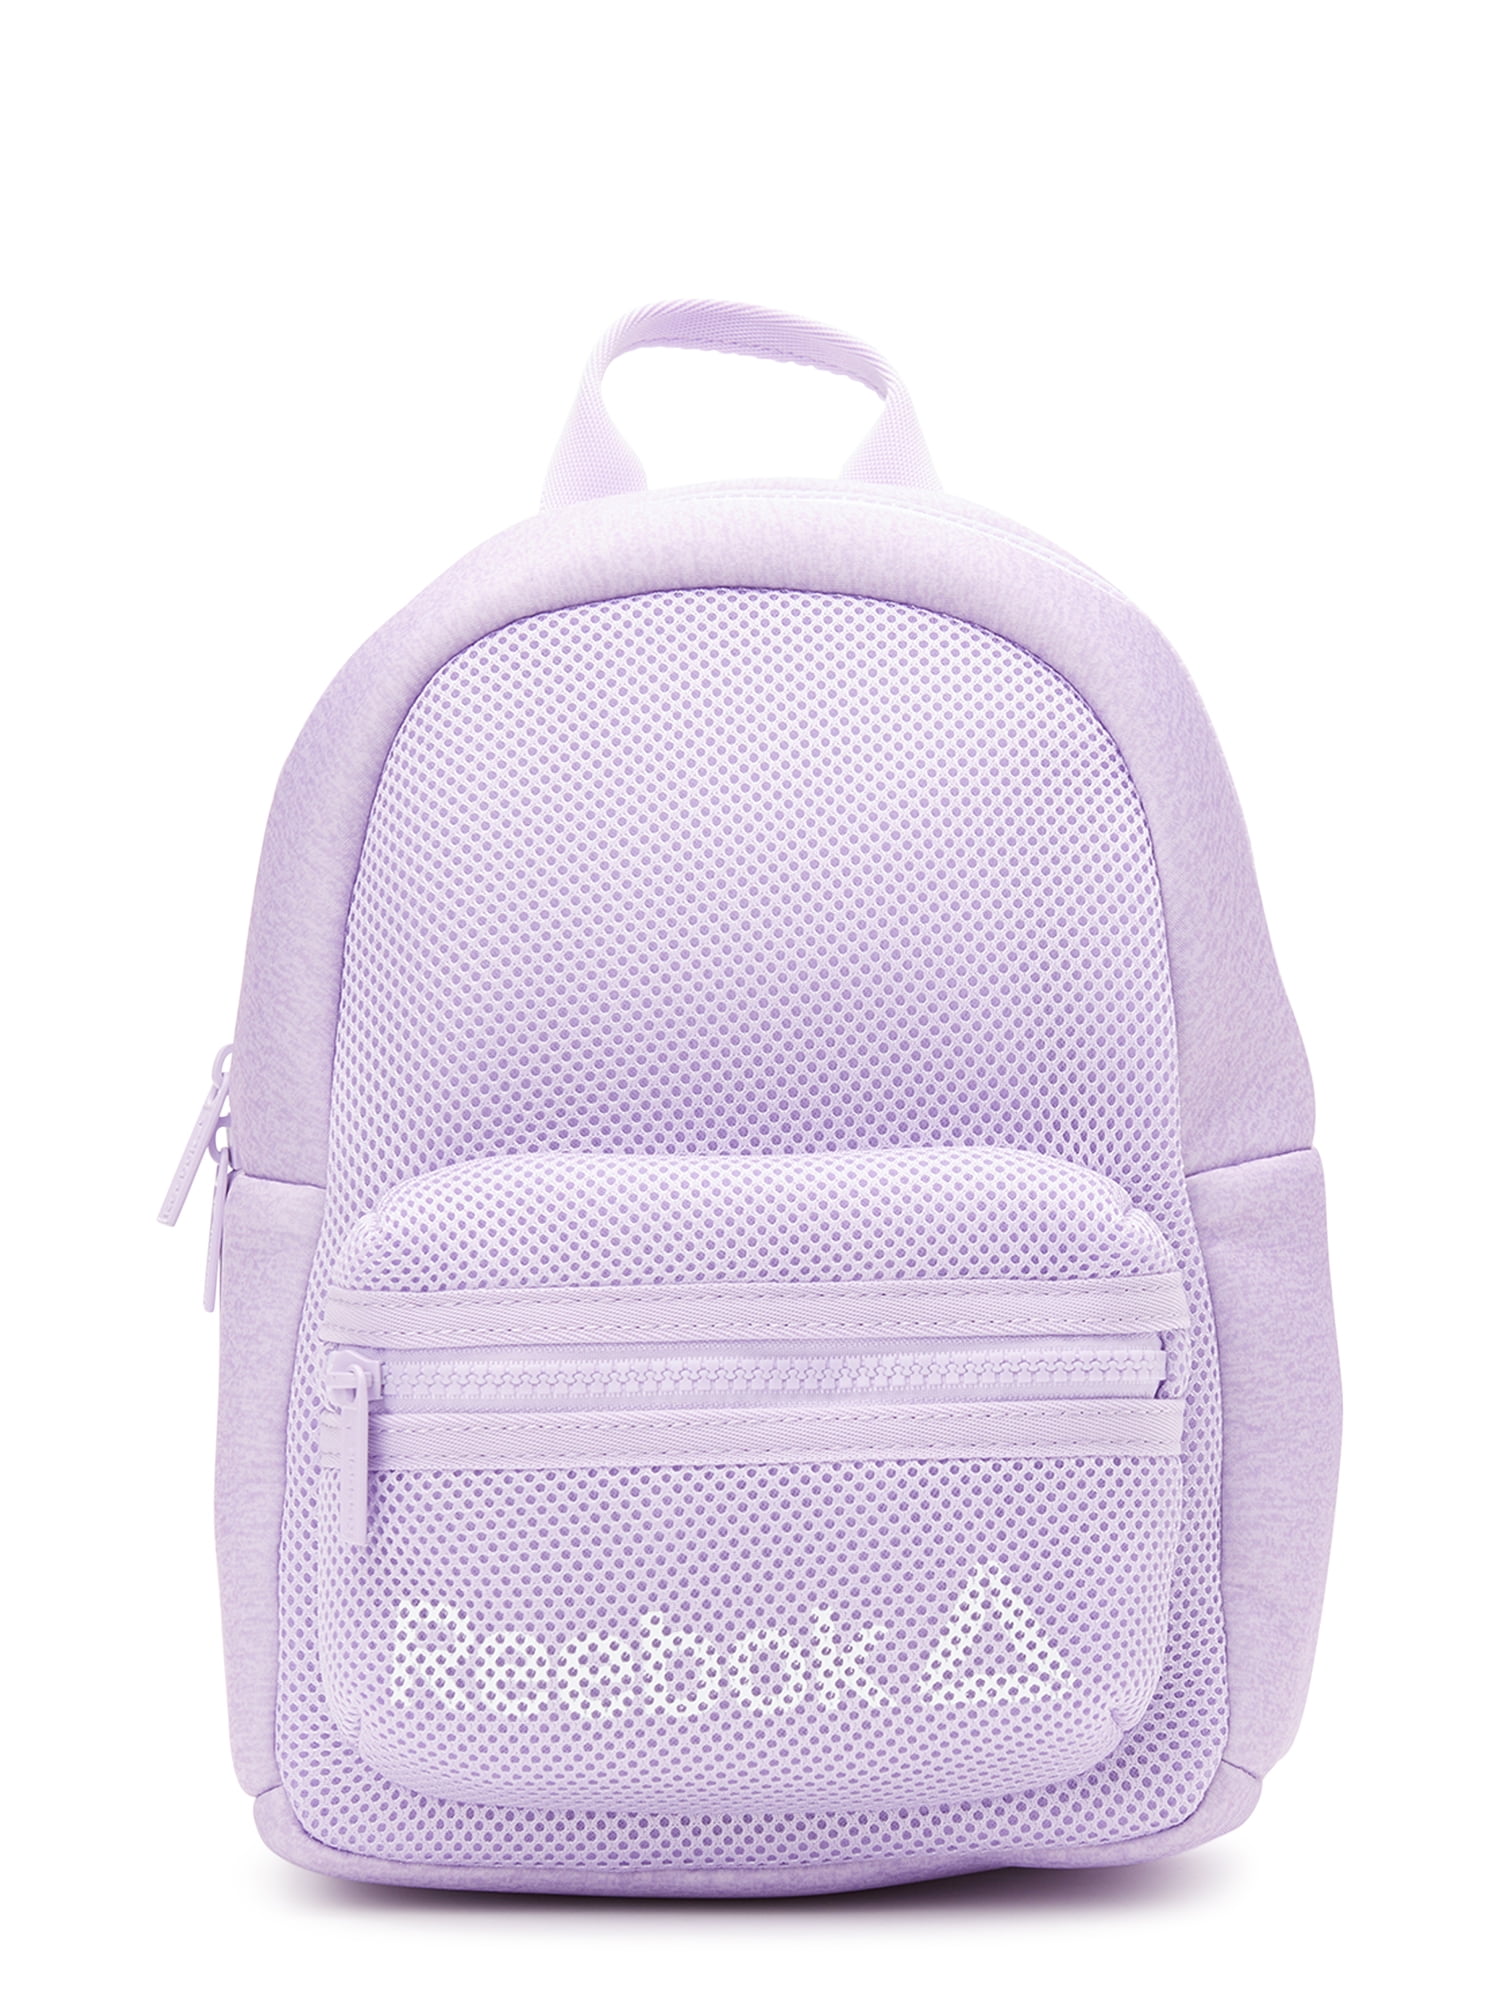 Reebok Women's Evie Mini Dome Backpack Purple